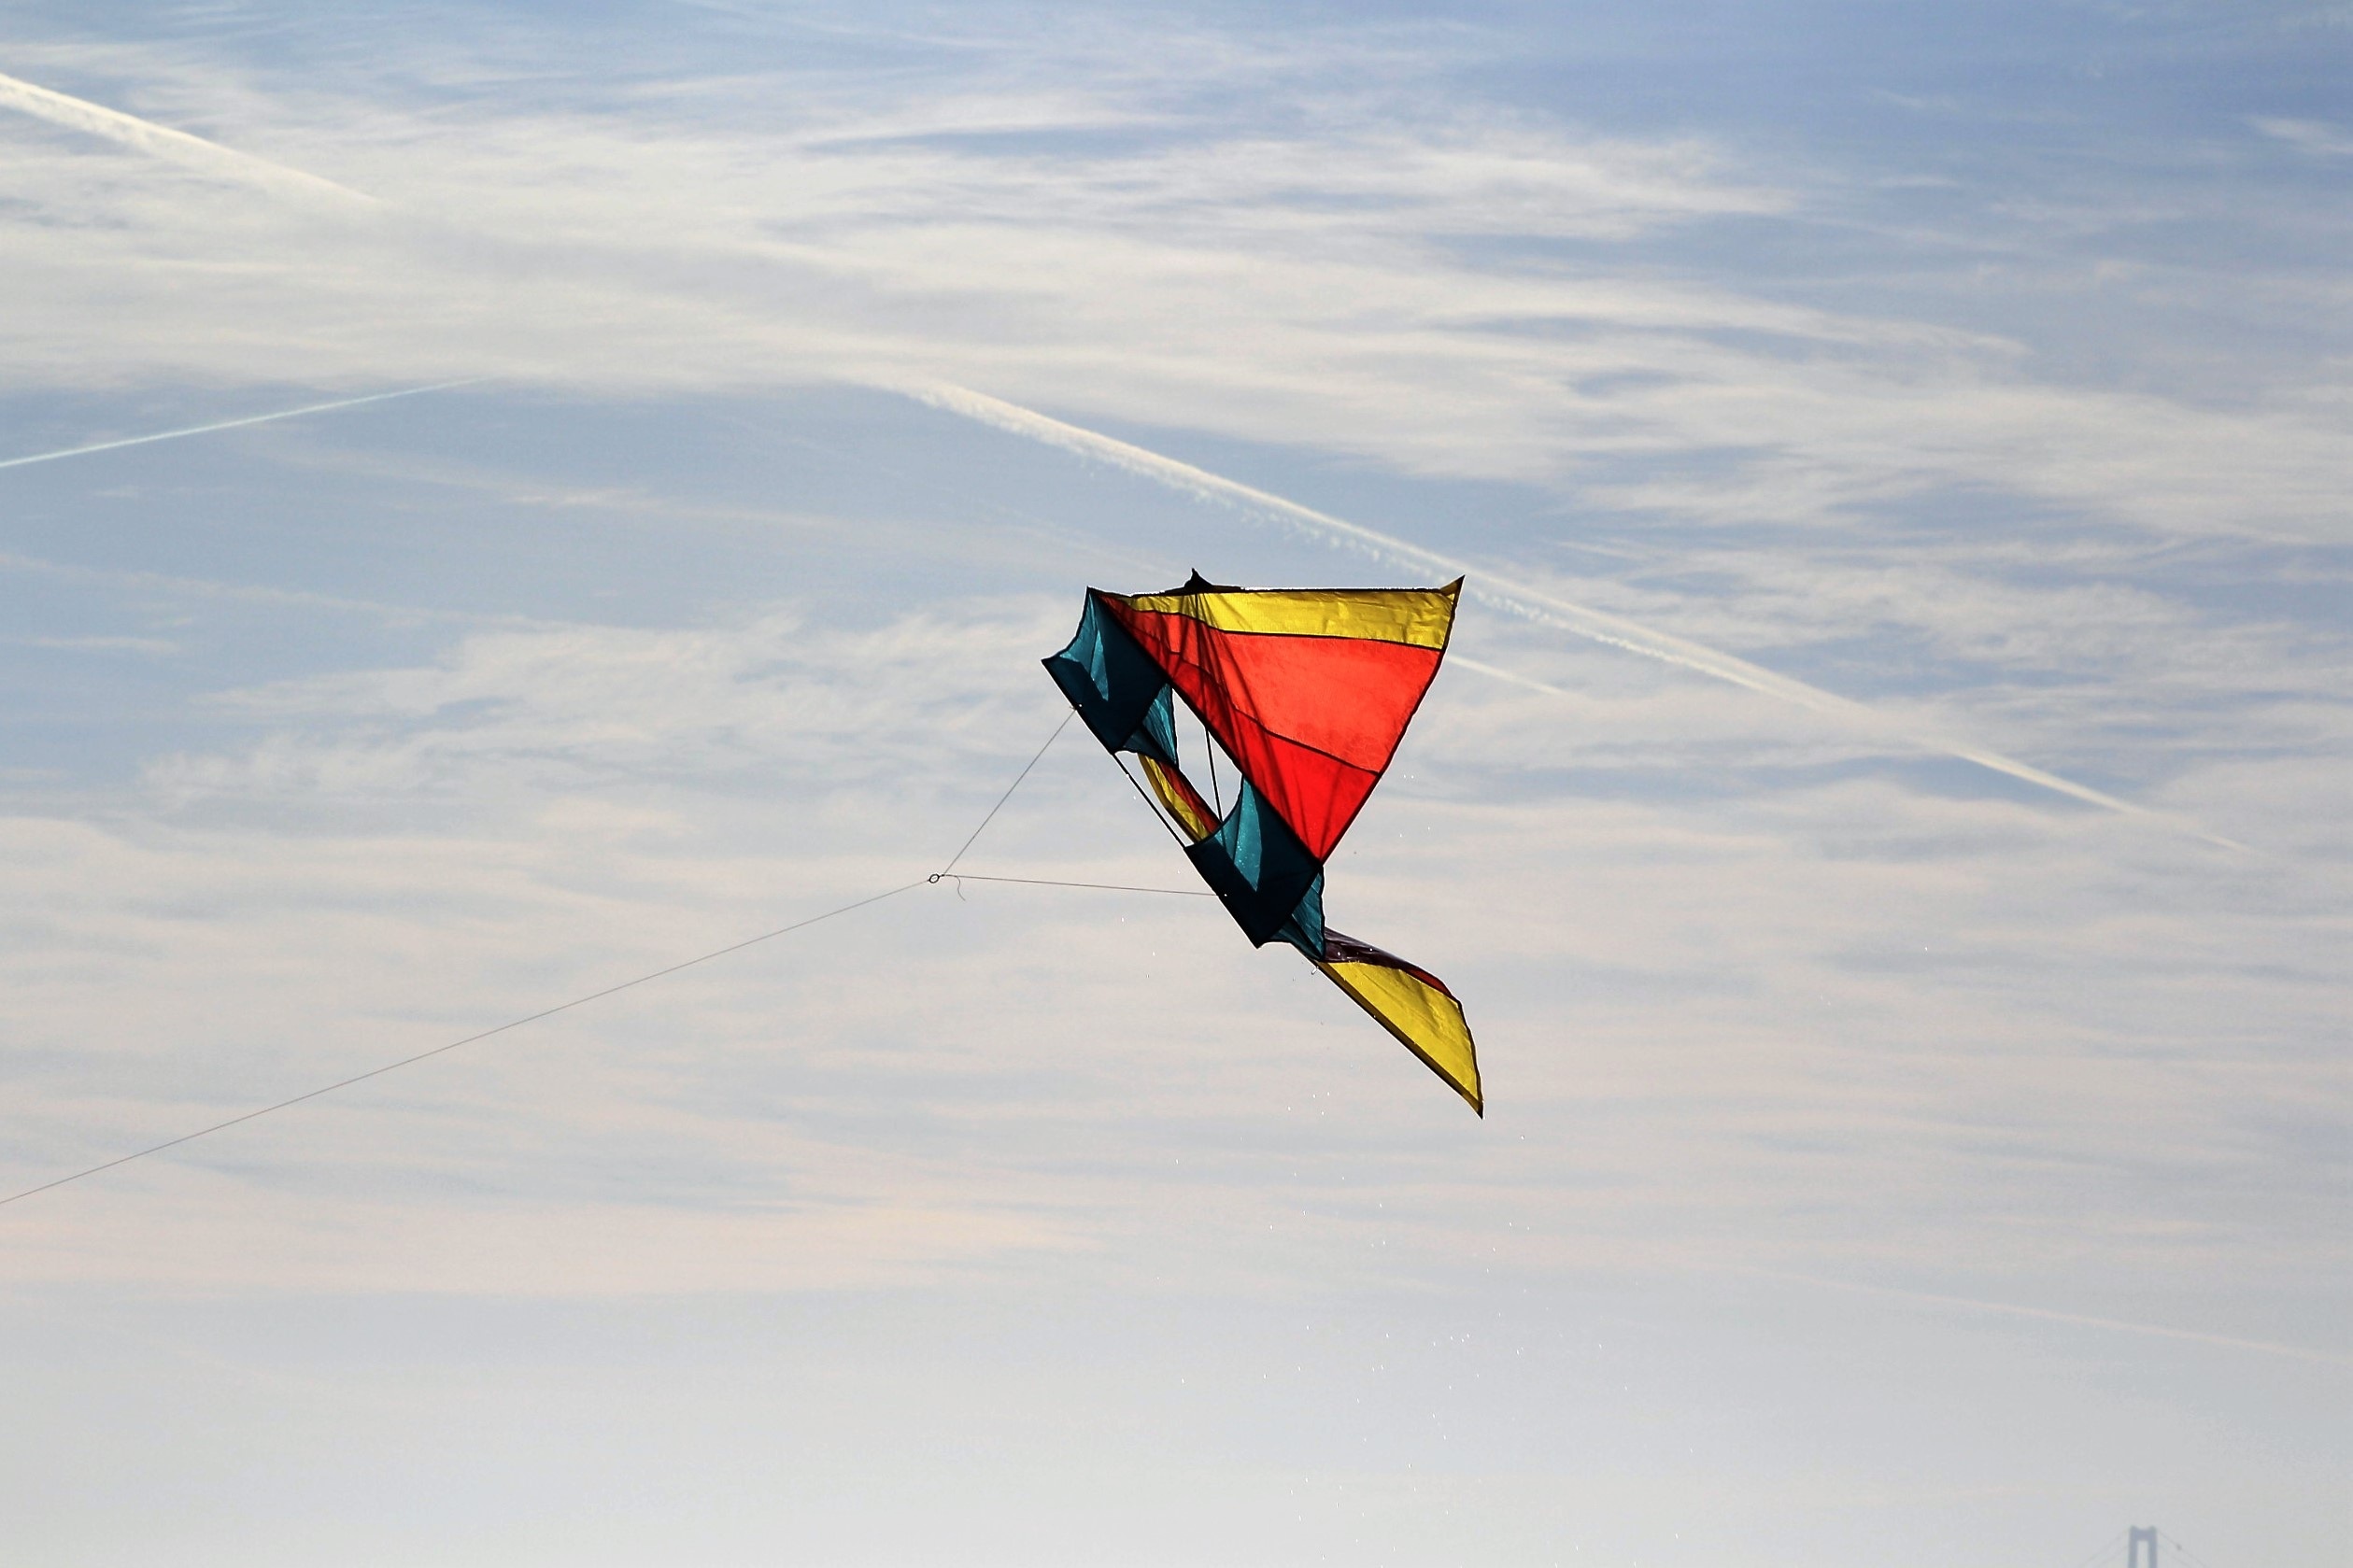 Kite Sports: Kite-making materials, Custom design, A large wind-range. 2520x1680 HD Wallpaper.